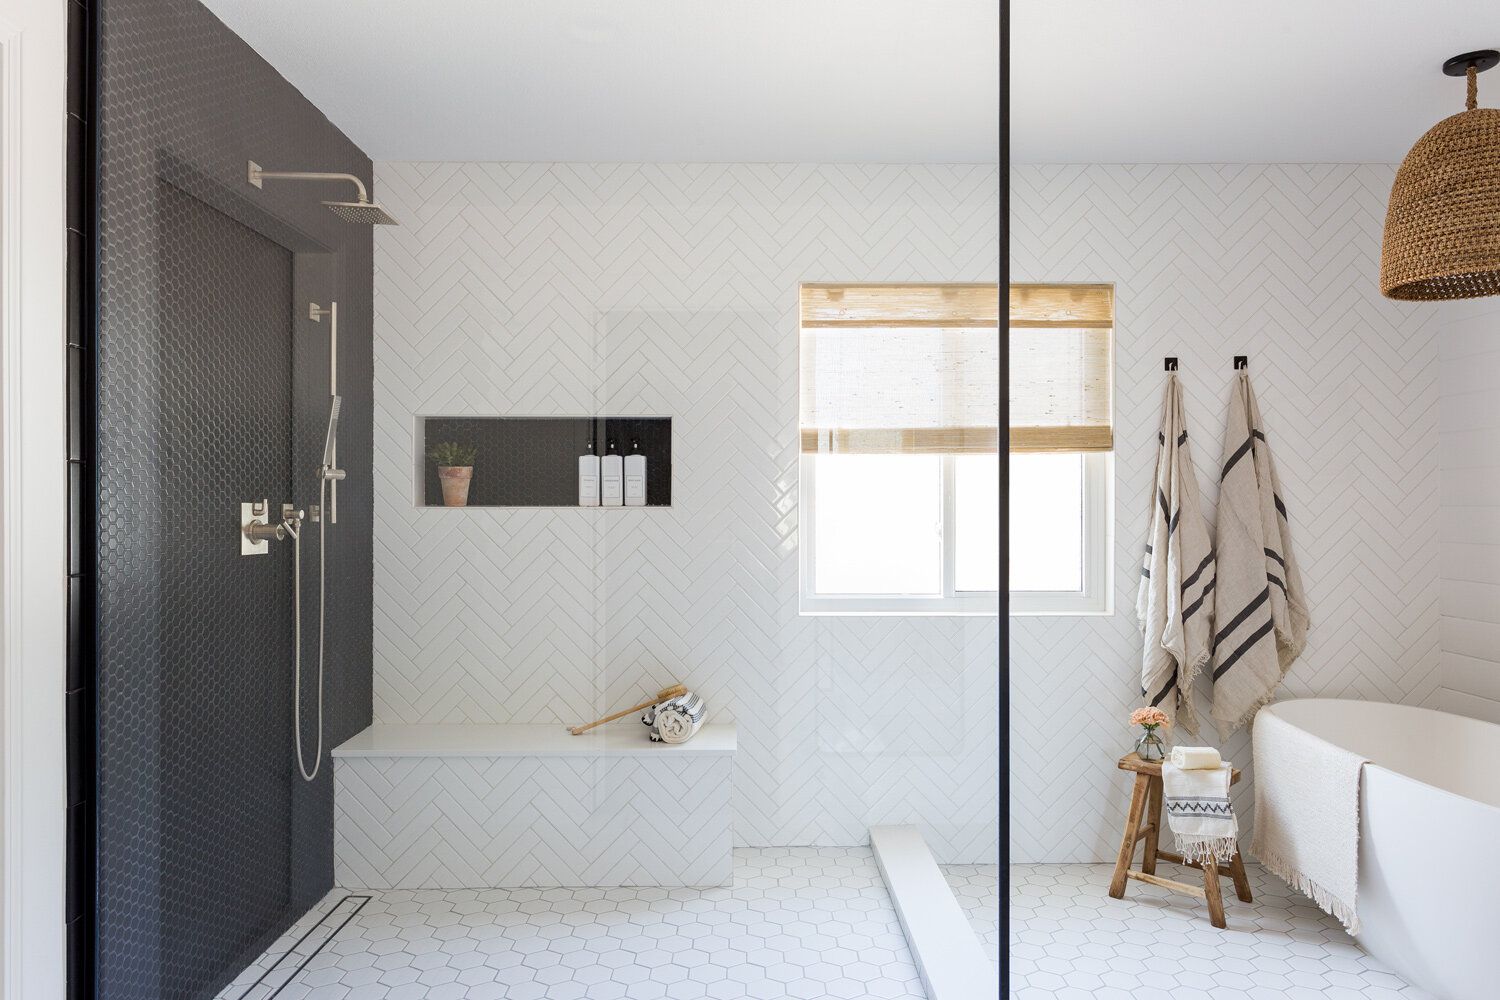 Consider these crucial tips when choosing bathroom tiles